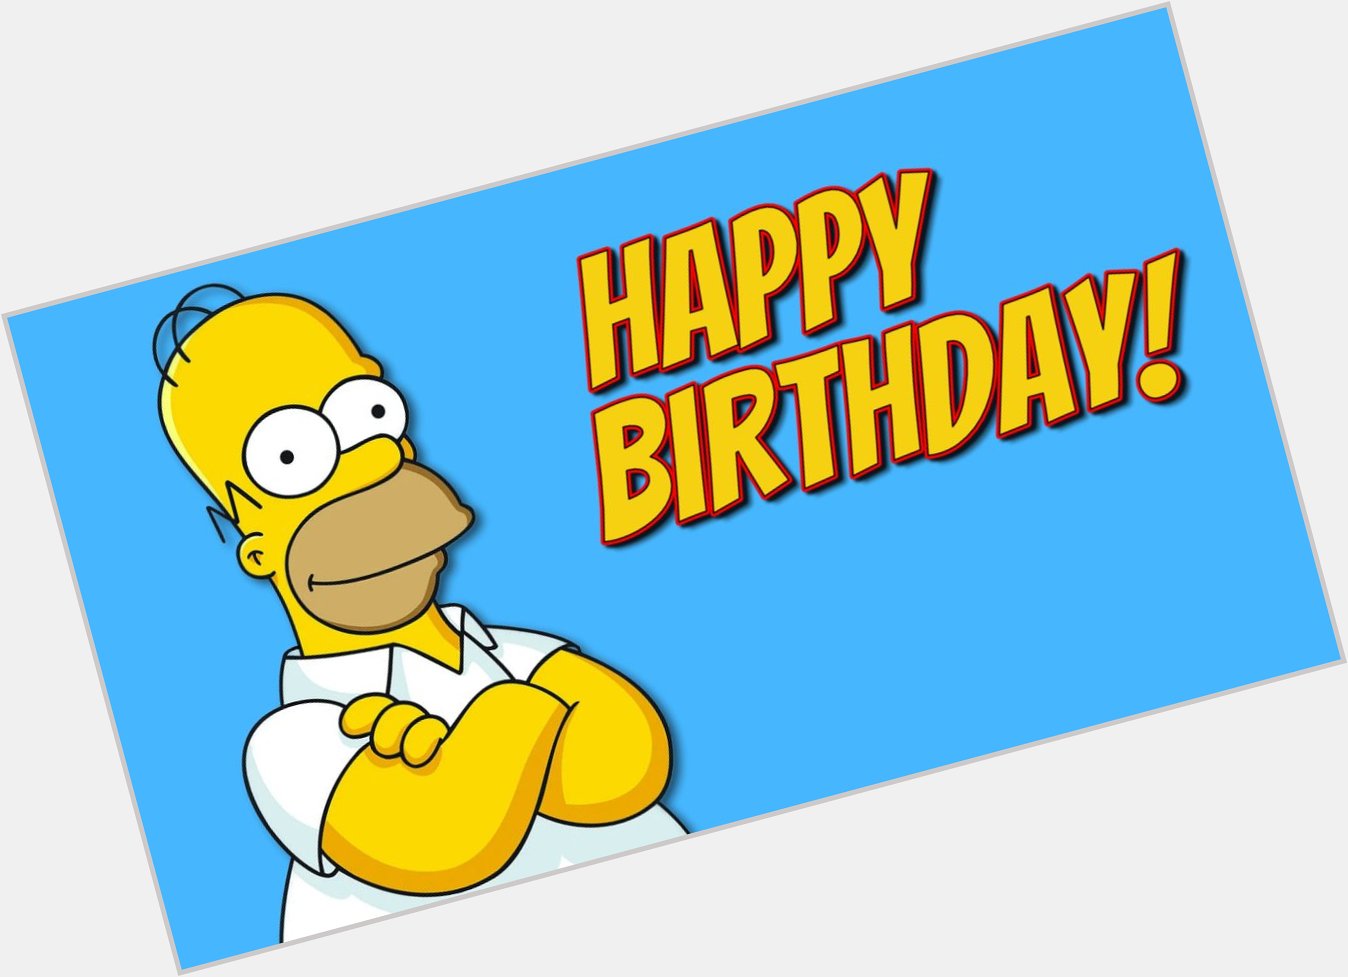 Happy Birthday to Homer Simpson   